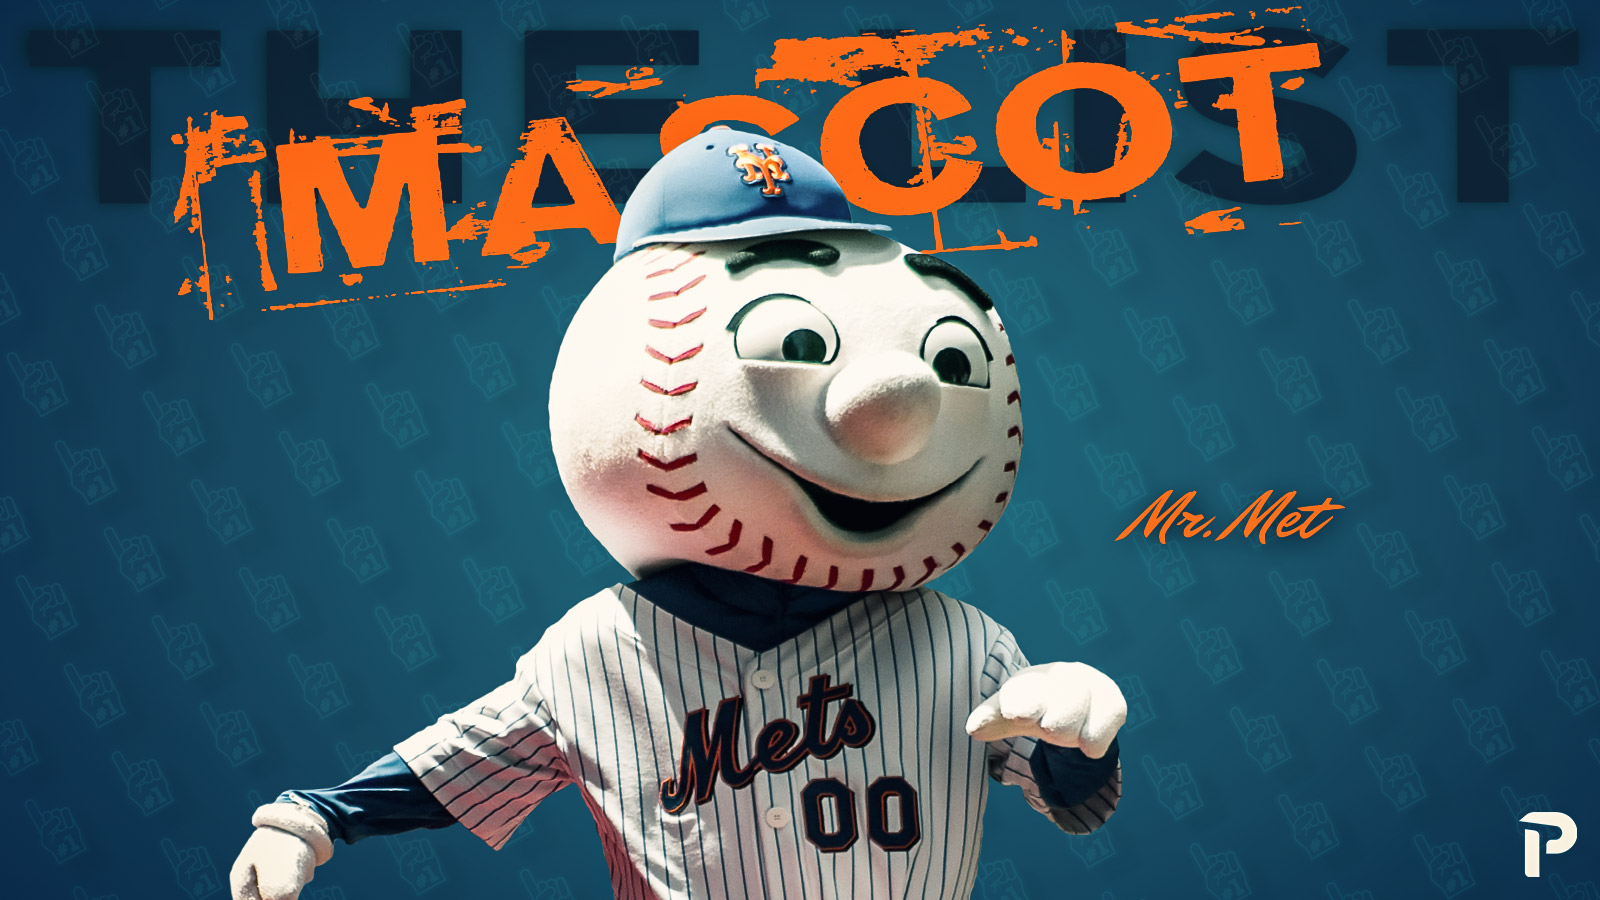 Ranking the MLB Mascots - Sports Illustrated